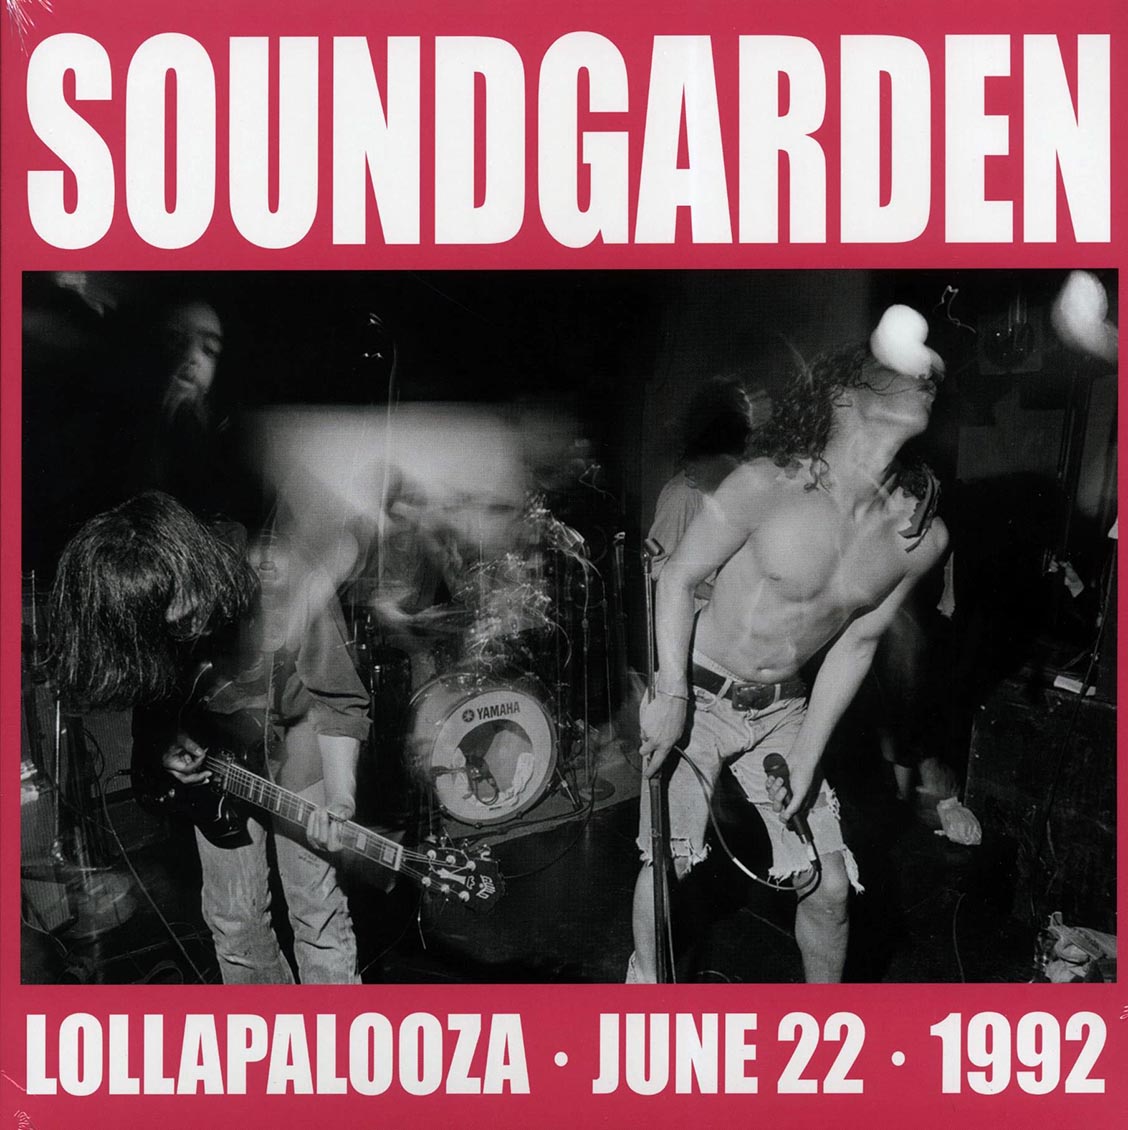 Soundgarden - Lollapalooza, June 22, 1992 (ltd. 500 copies made) - Vinyl LP